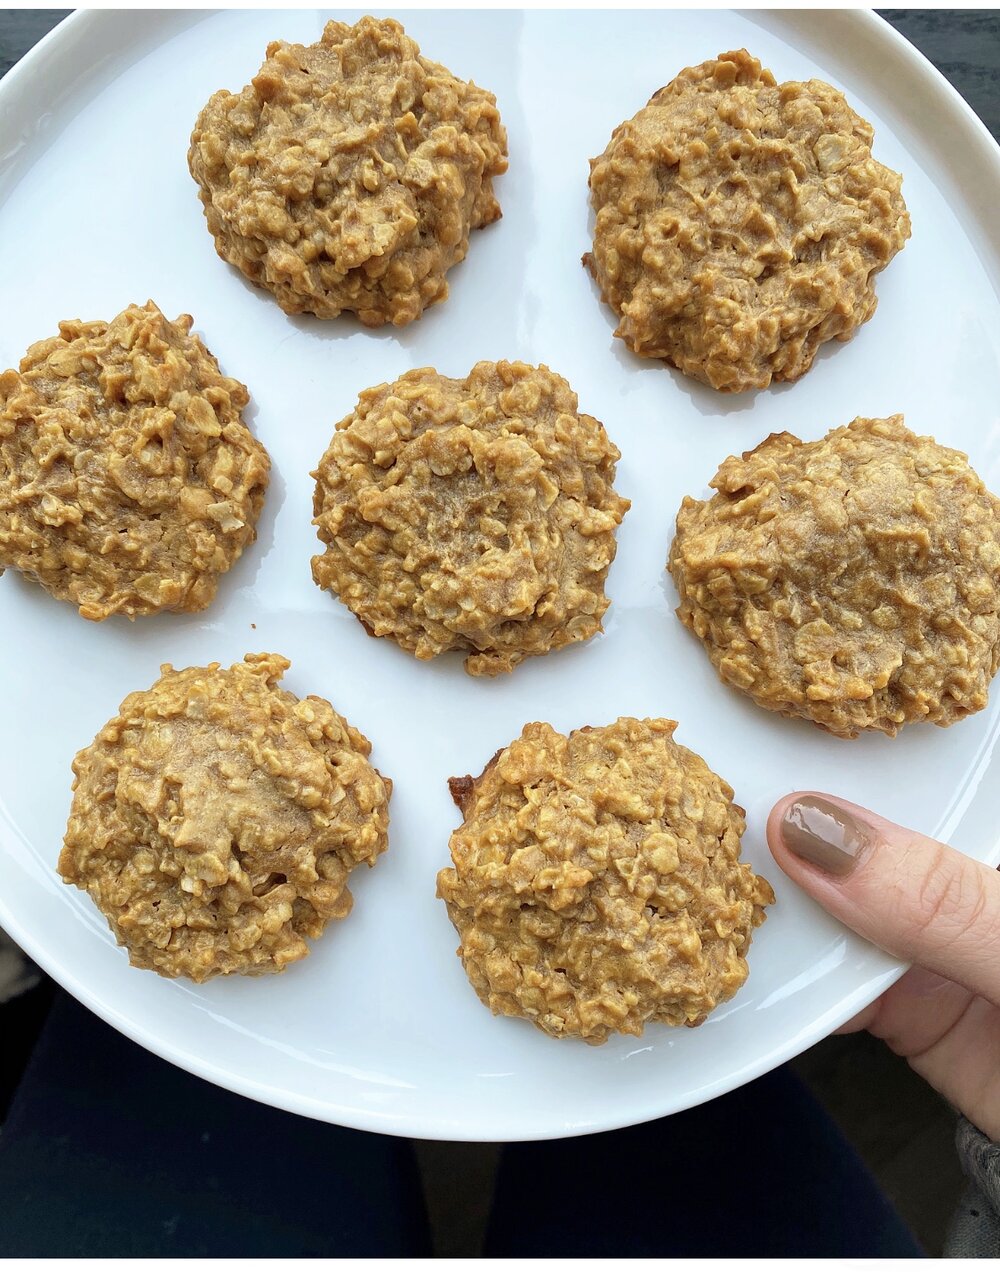 Healthy Peanut Butter Oatmeal Cookies Sammi Brondo Nyc Based Registered Dietitian Nutritionist